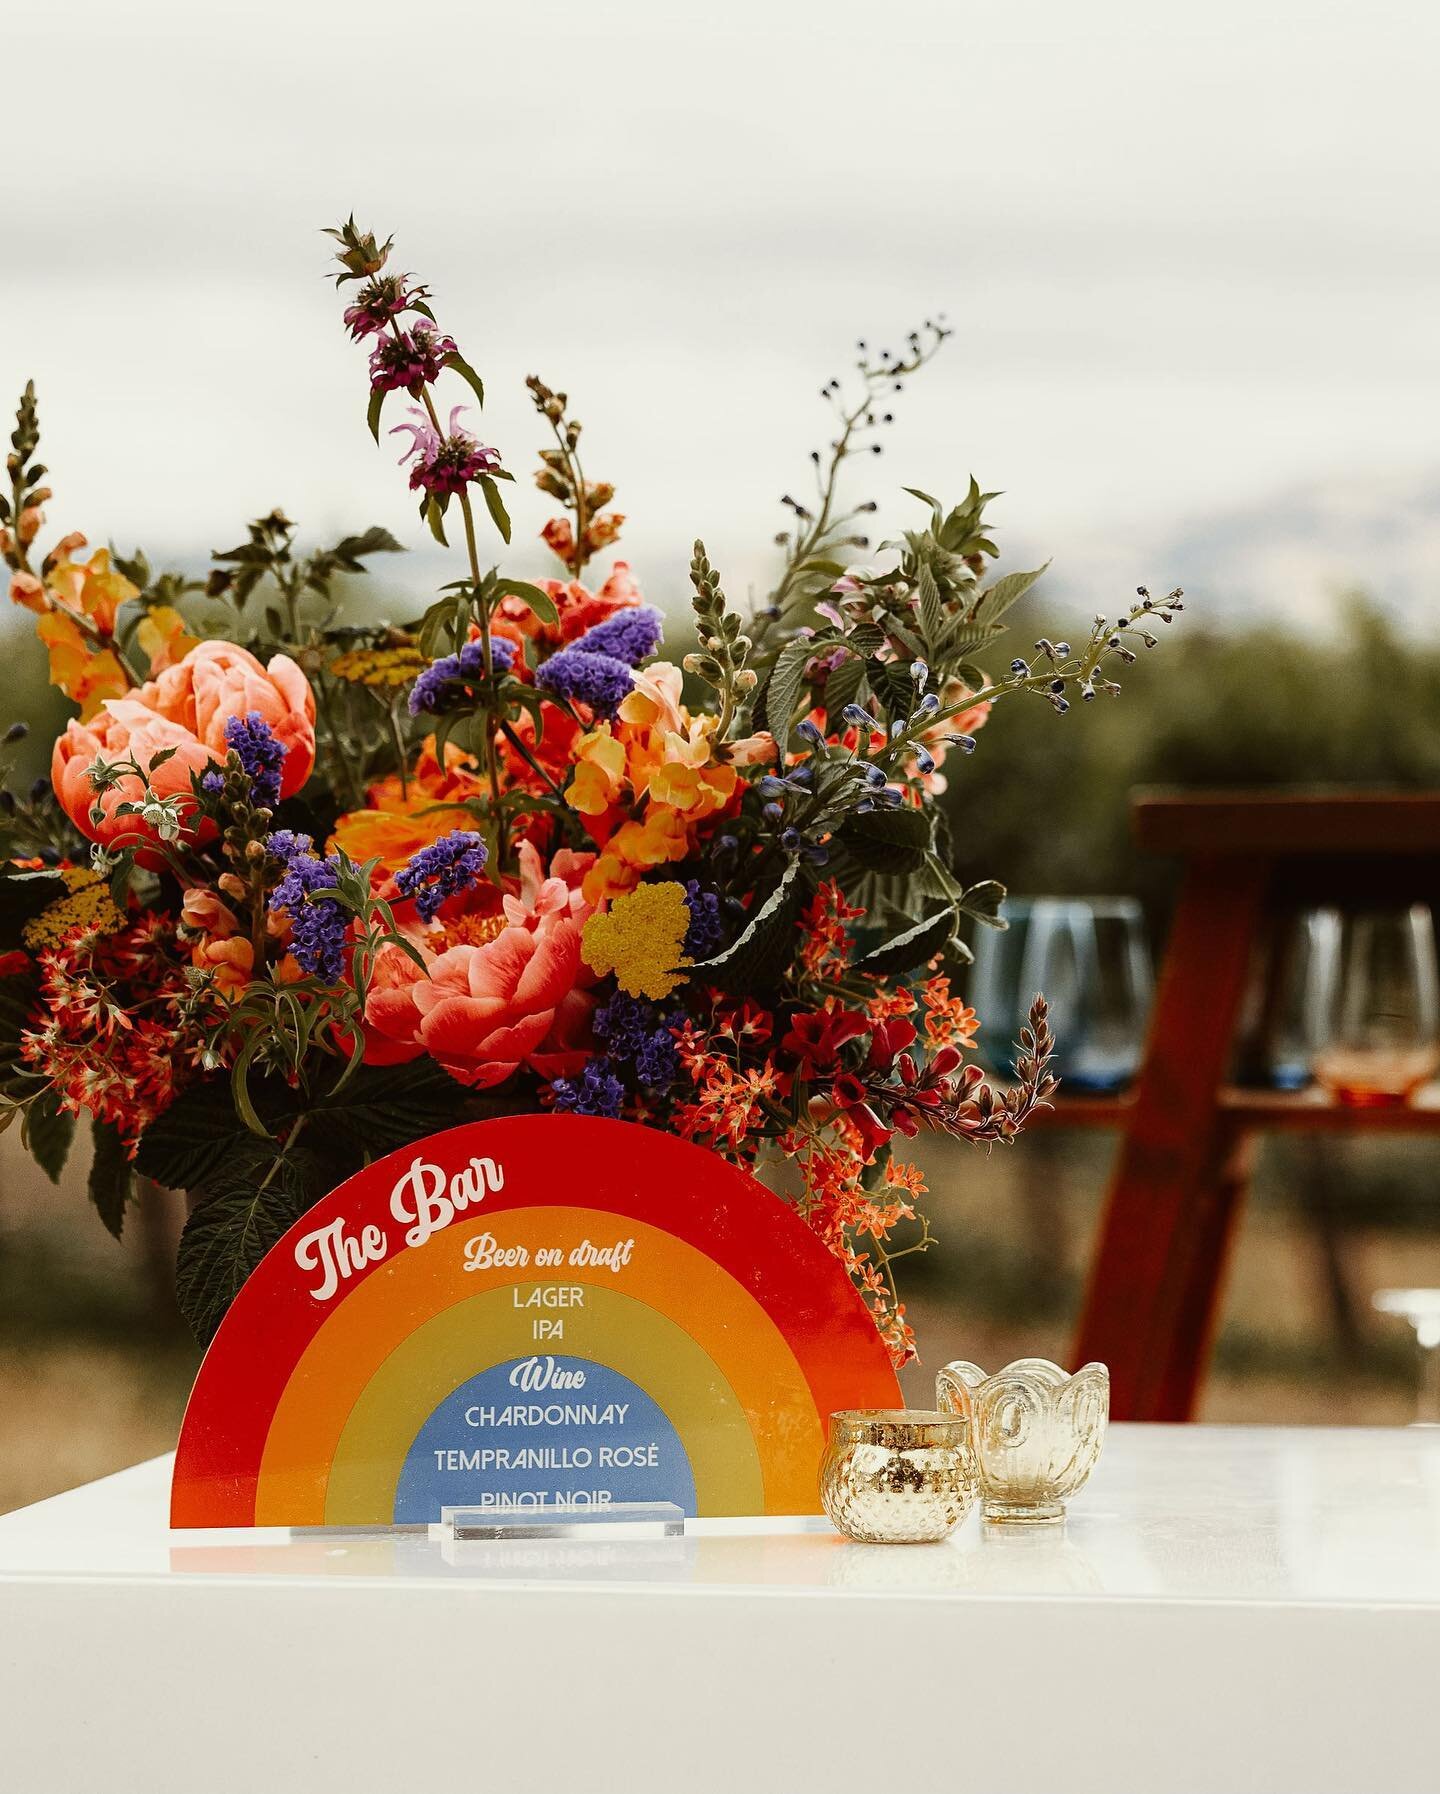 Happy Sunday! All the colorful vibes for this psychedelic wedding in Sonoma! Love all the bright retro custom acrylic signage! 

Photographer: @silverseaseeddings
Florist: @beijaflorbotanicals
Planning/Design: @atlas_designstudio
Venue: @gunbunwine